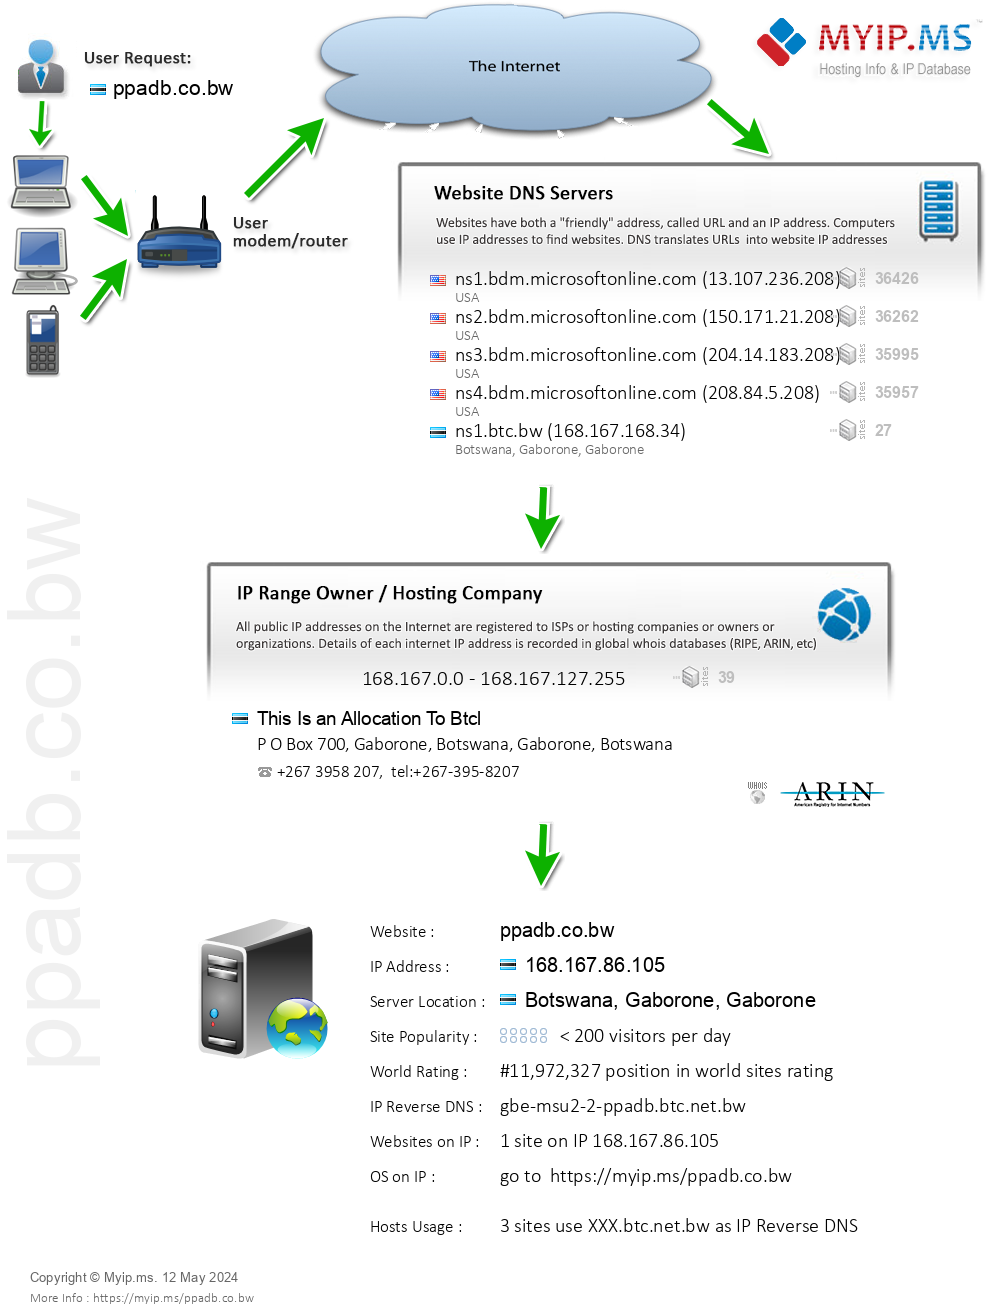 Ppadb.co.bw - Website Hosting Visual IP Diagram